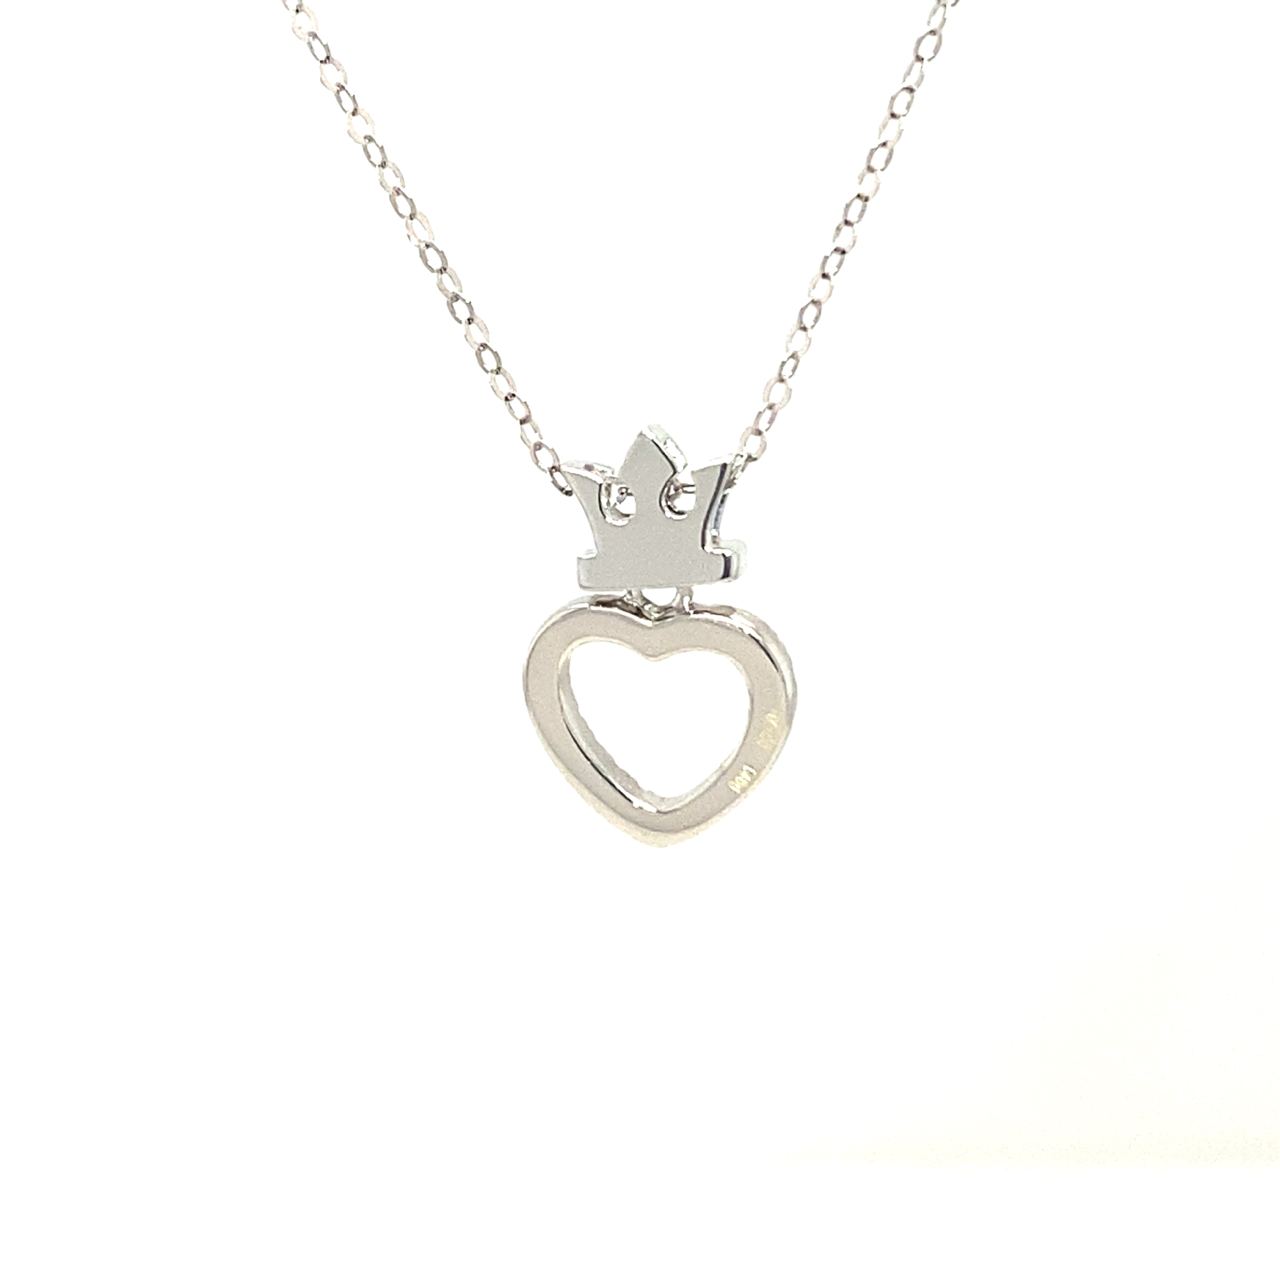 18K White Gold Crown Full Heart Diamond Necklace